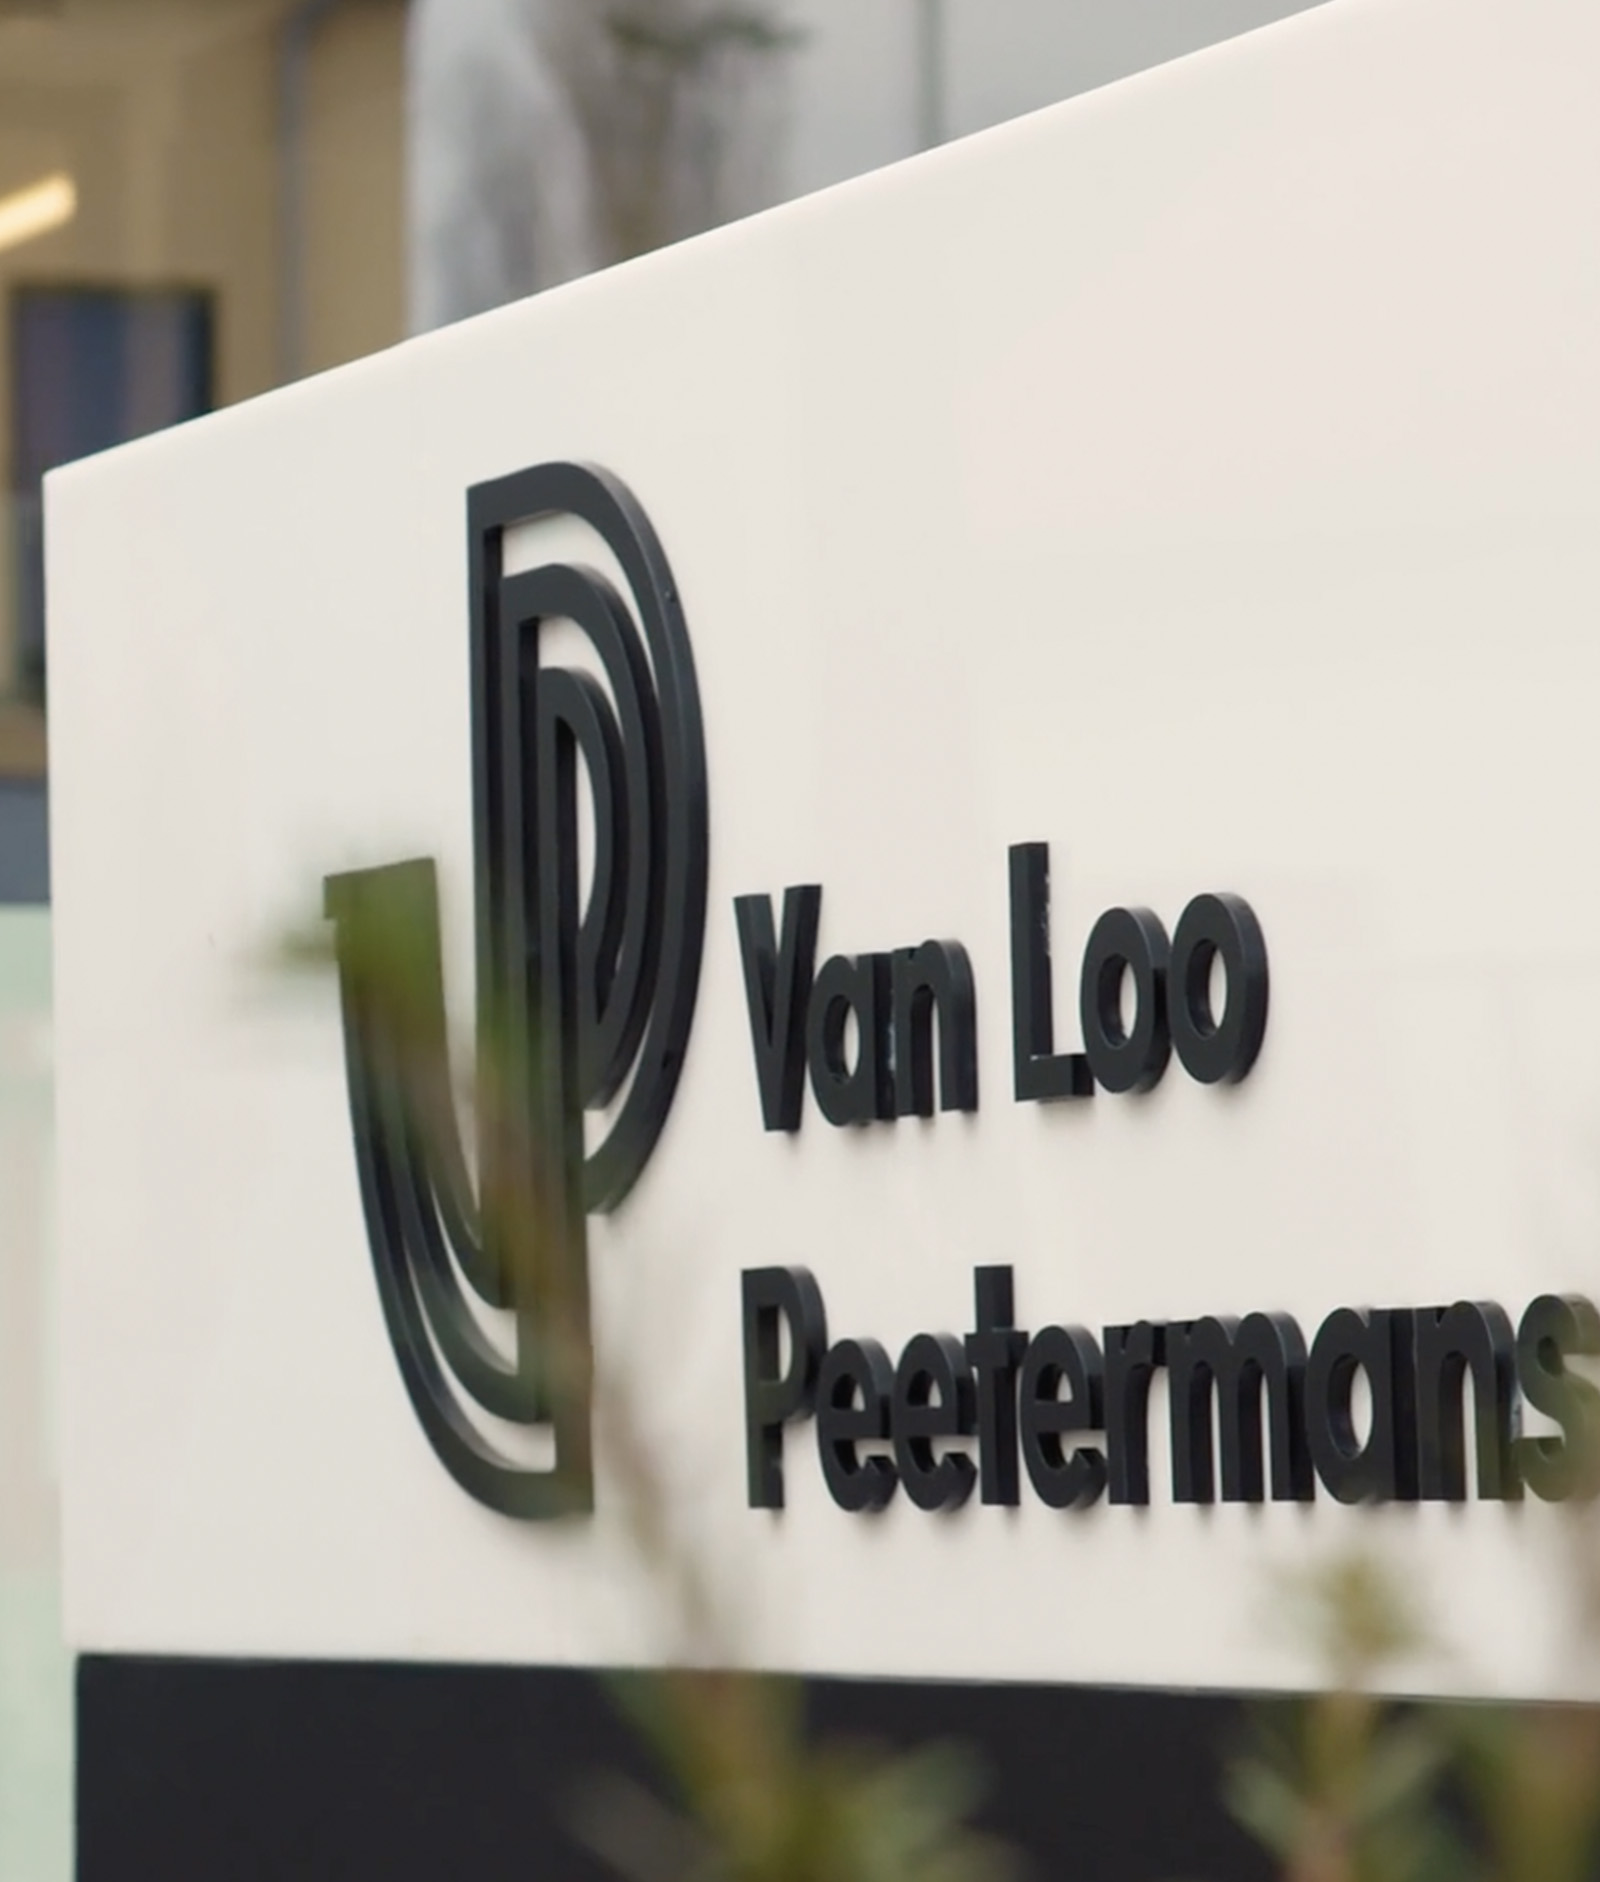 Van Loo Peetermans/Hypotheekwinkel – New office